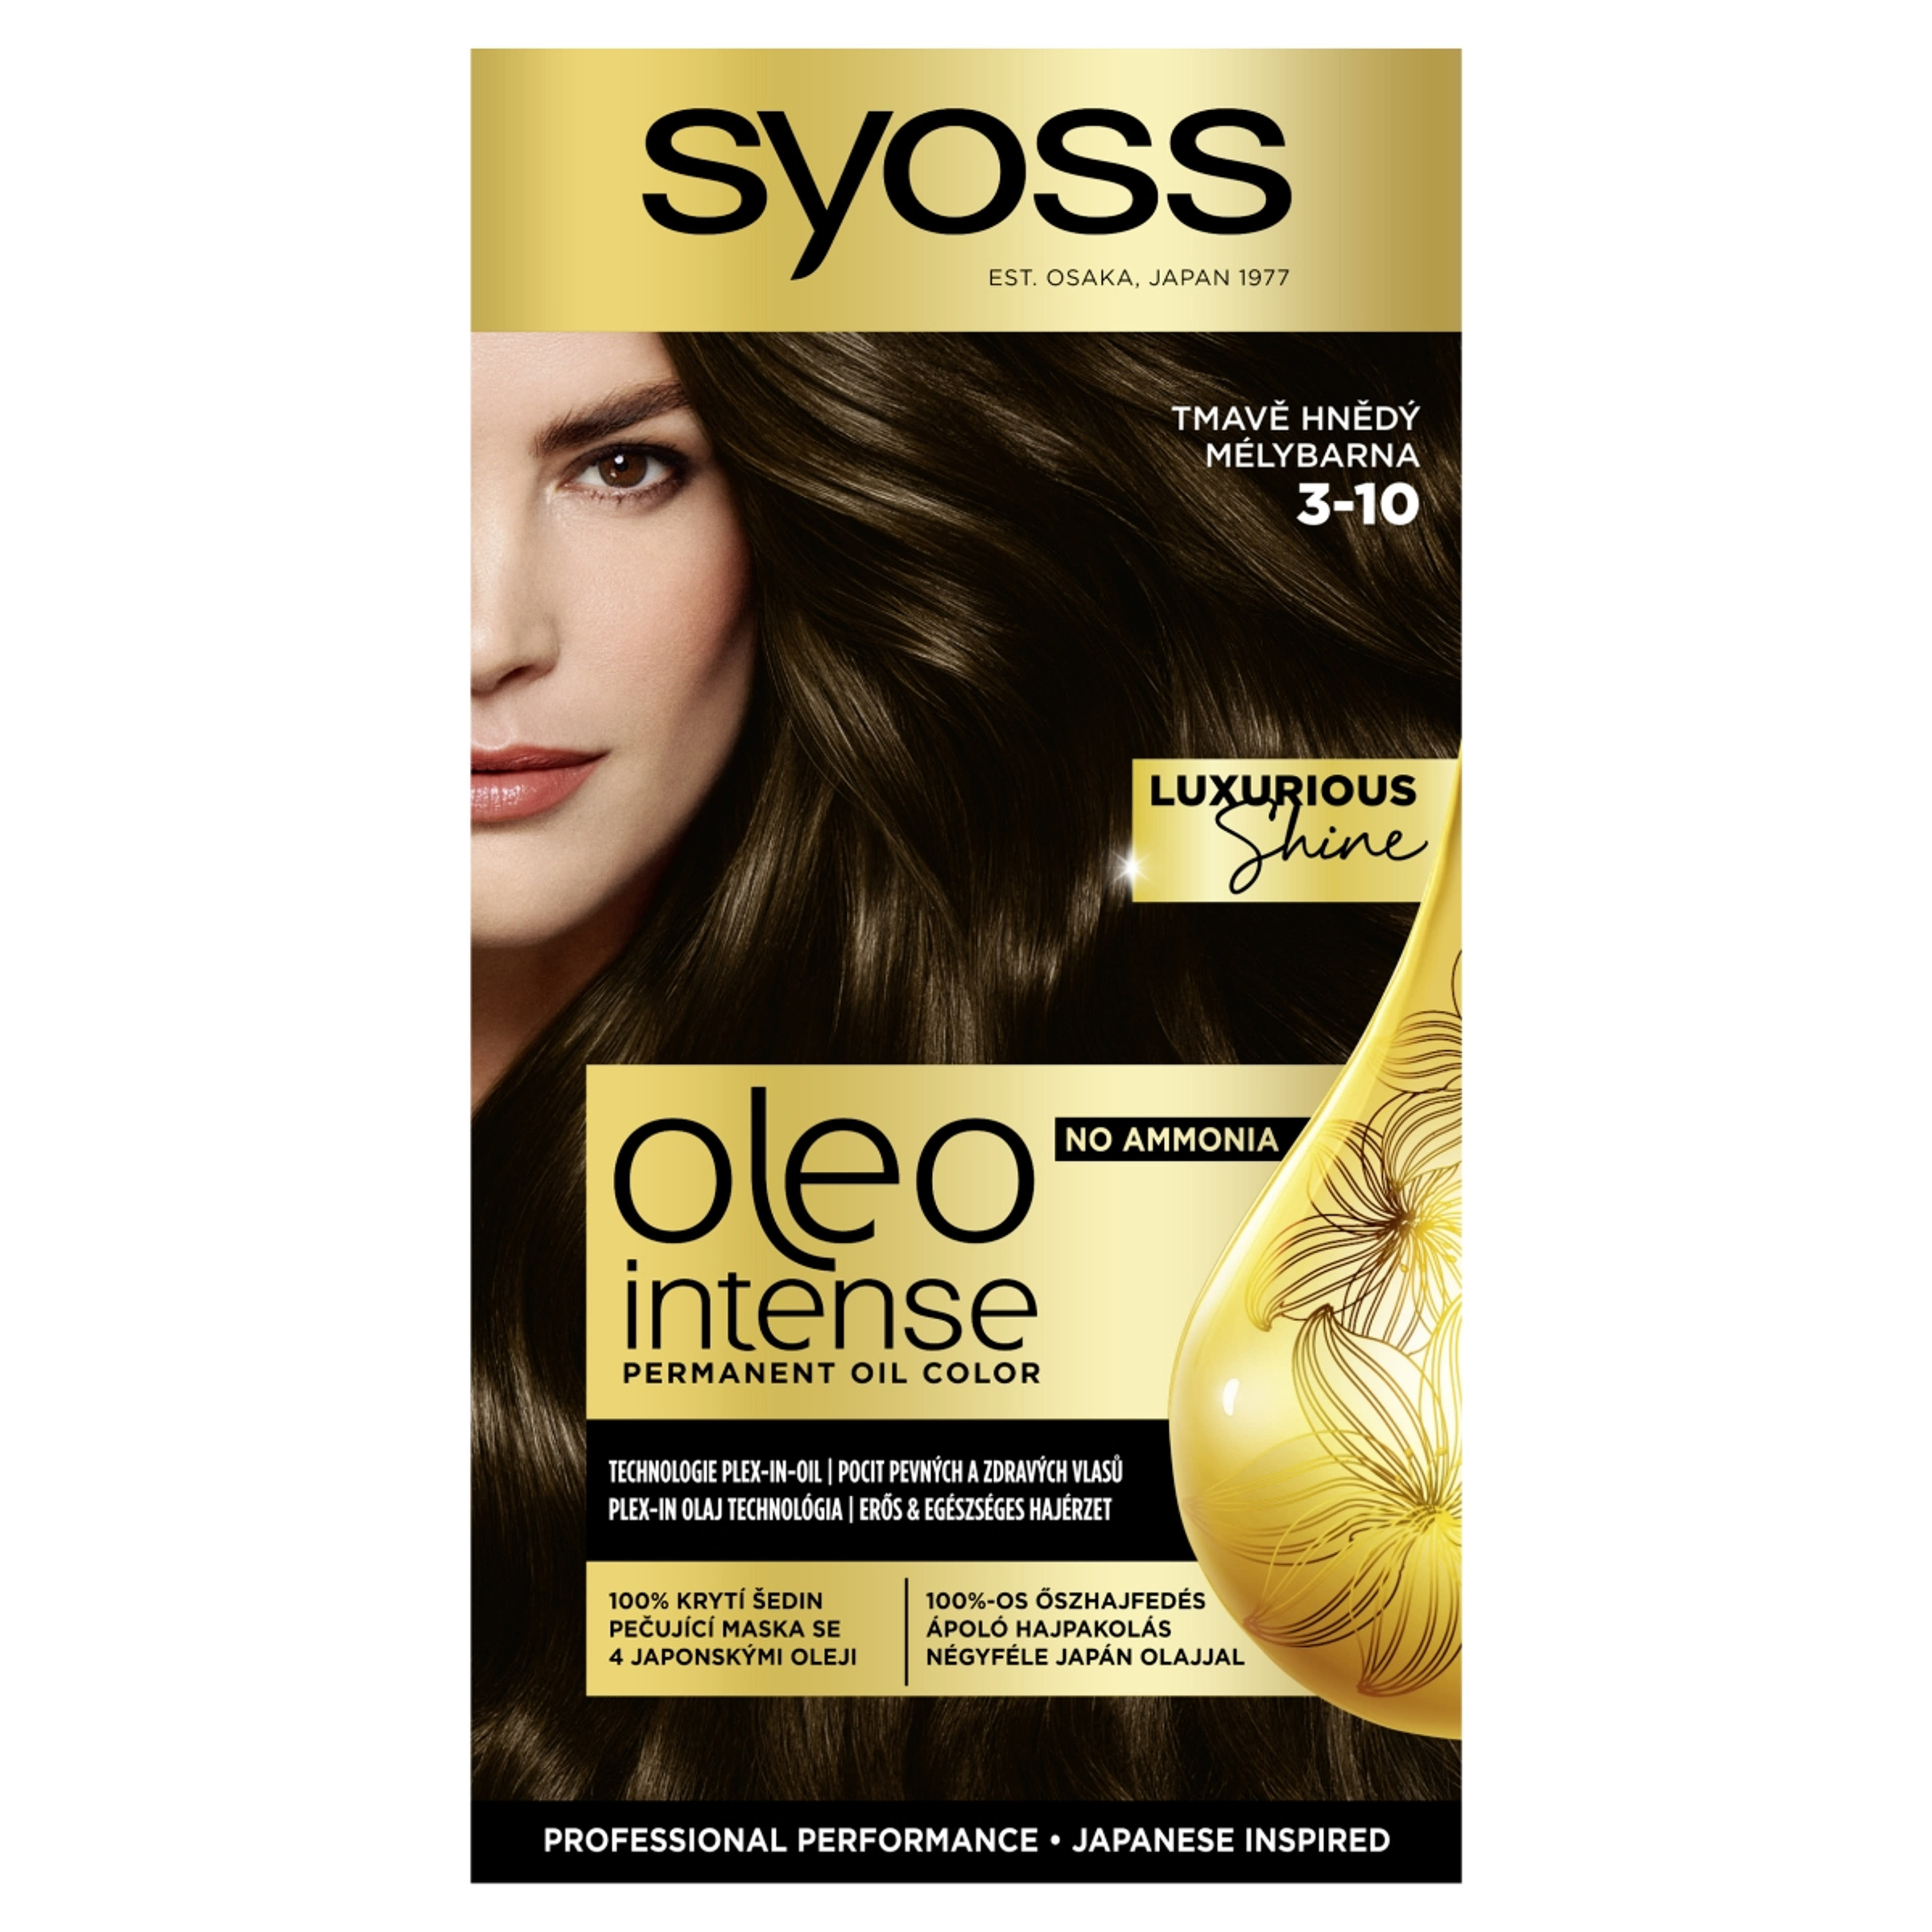 Syoss Color Oleo intenzív olaj hajfesték 3-10 mélybarna - 1 db